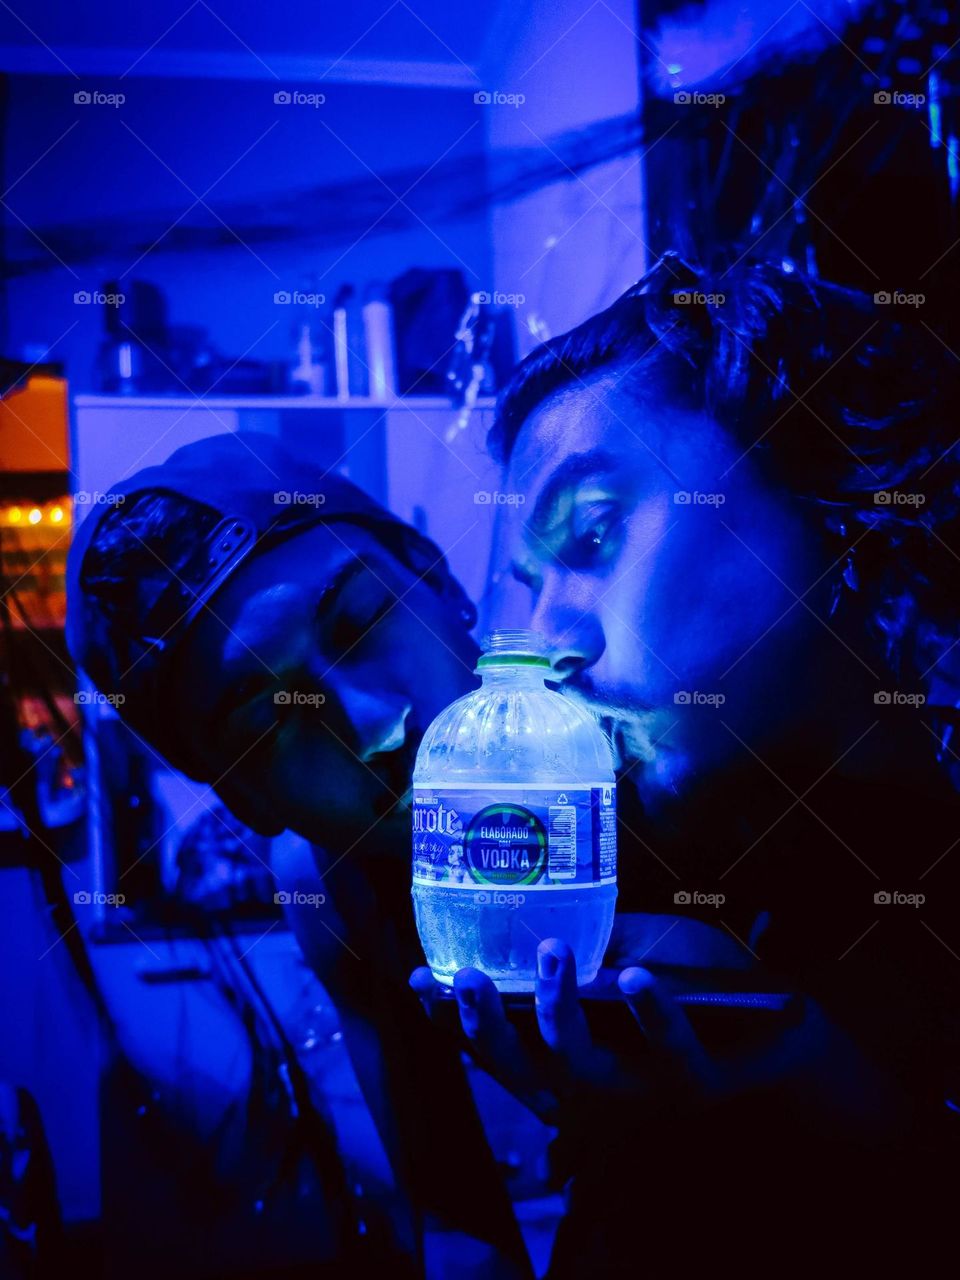 Two men kissing a glowing bottle of cachaça, beautiful close up portrait of a Corote Bottle Purple and blue colors on the photography.
Dois homens beijando uma garrafa de Cachaça Corote